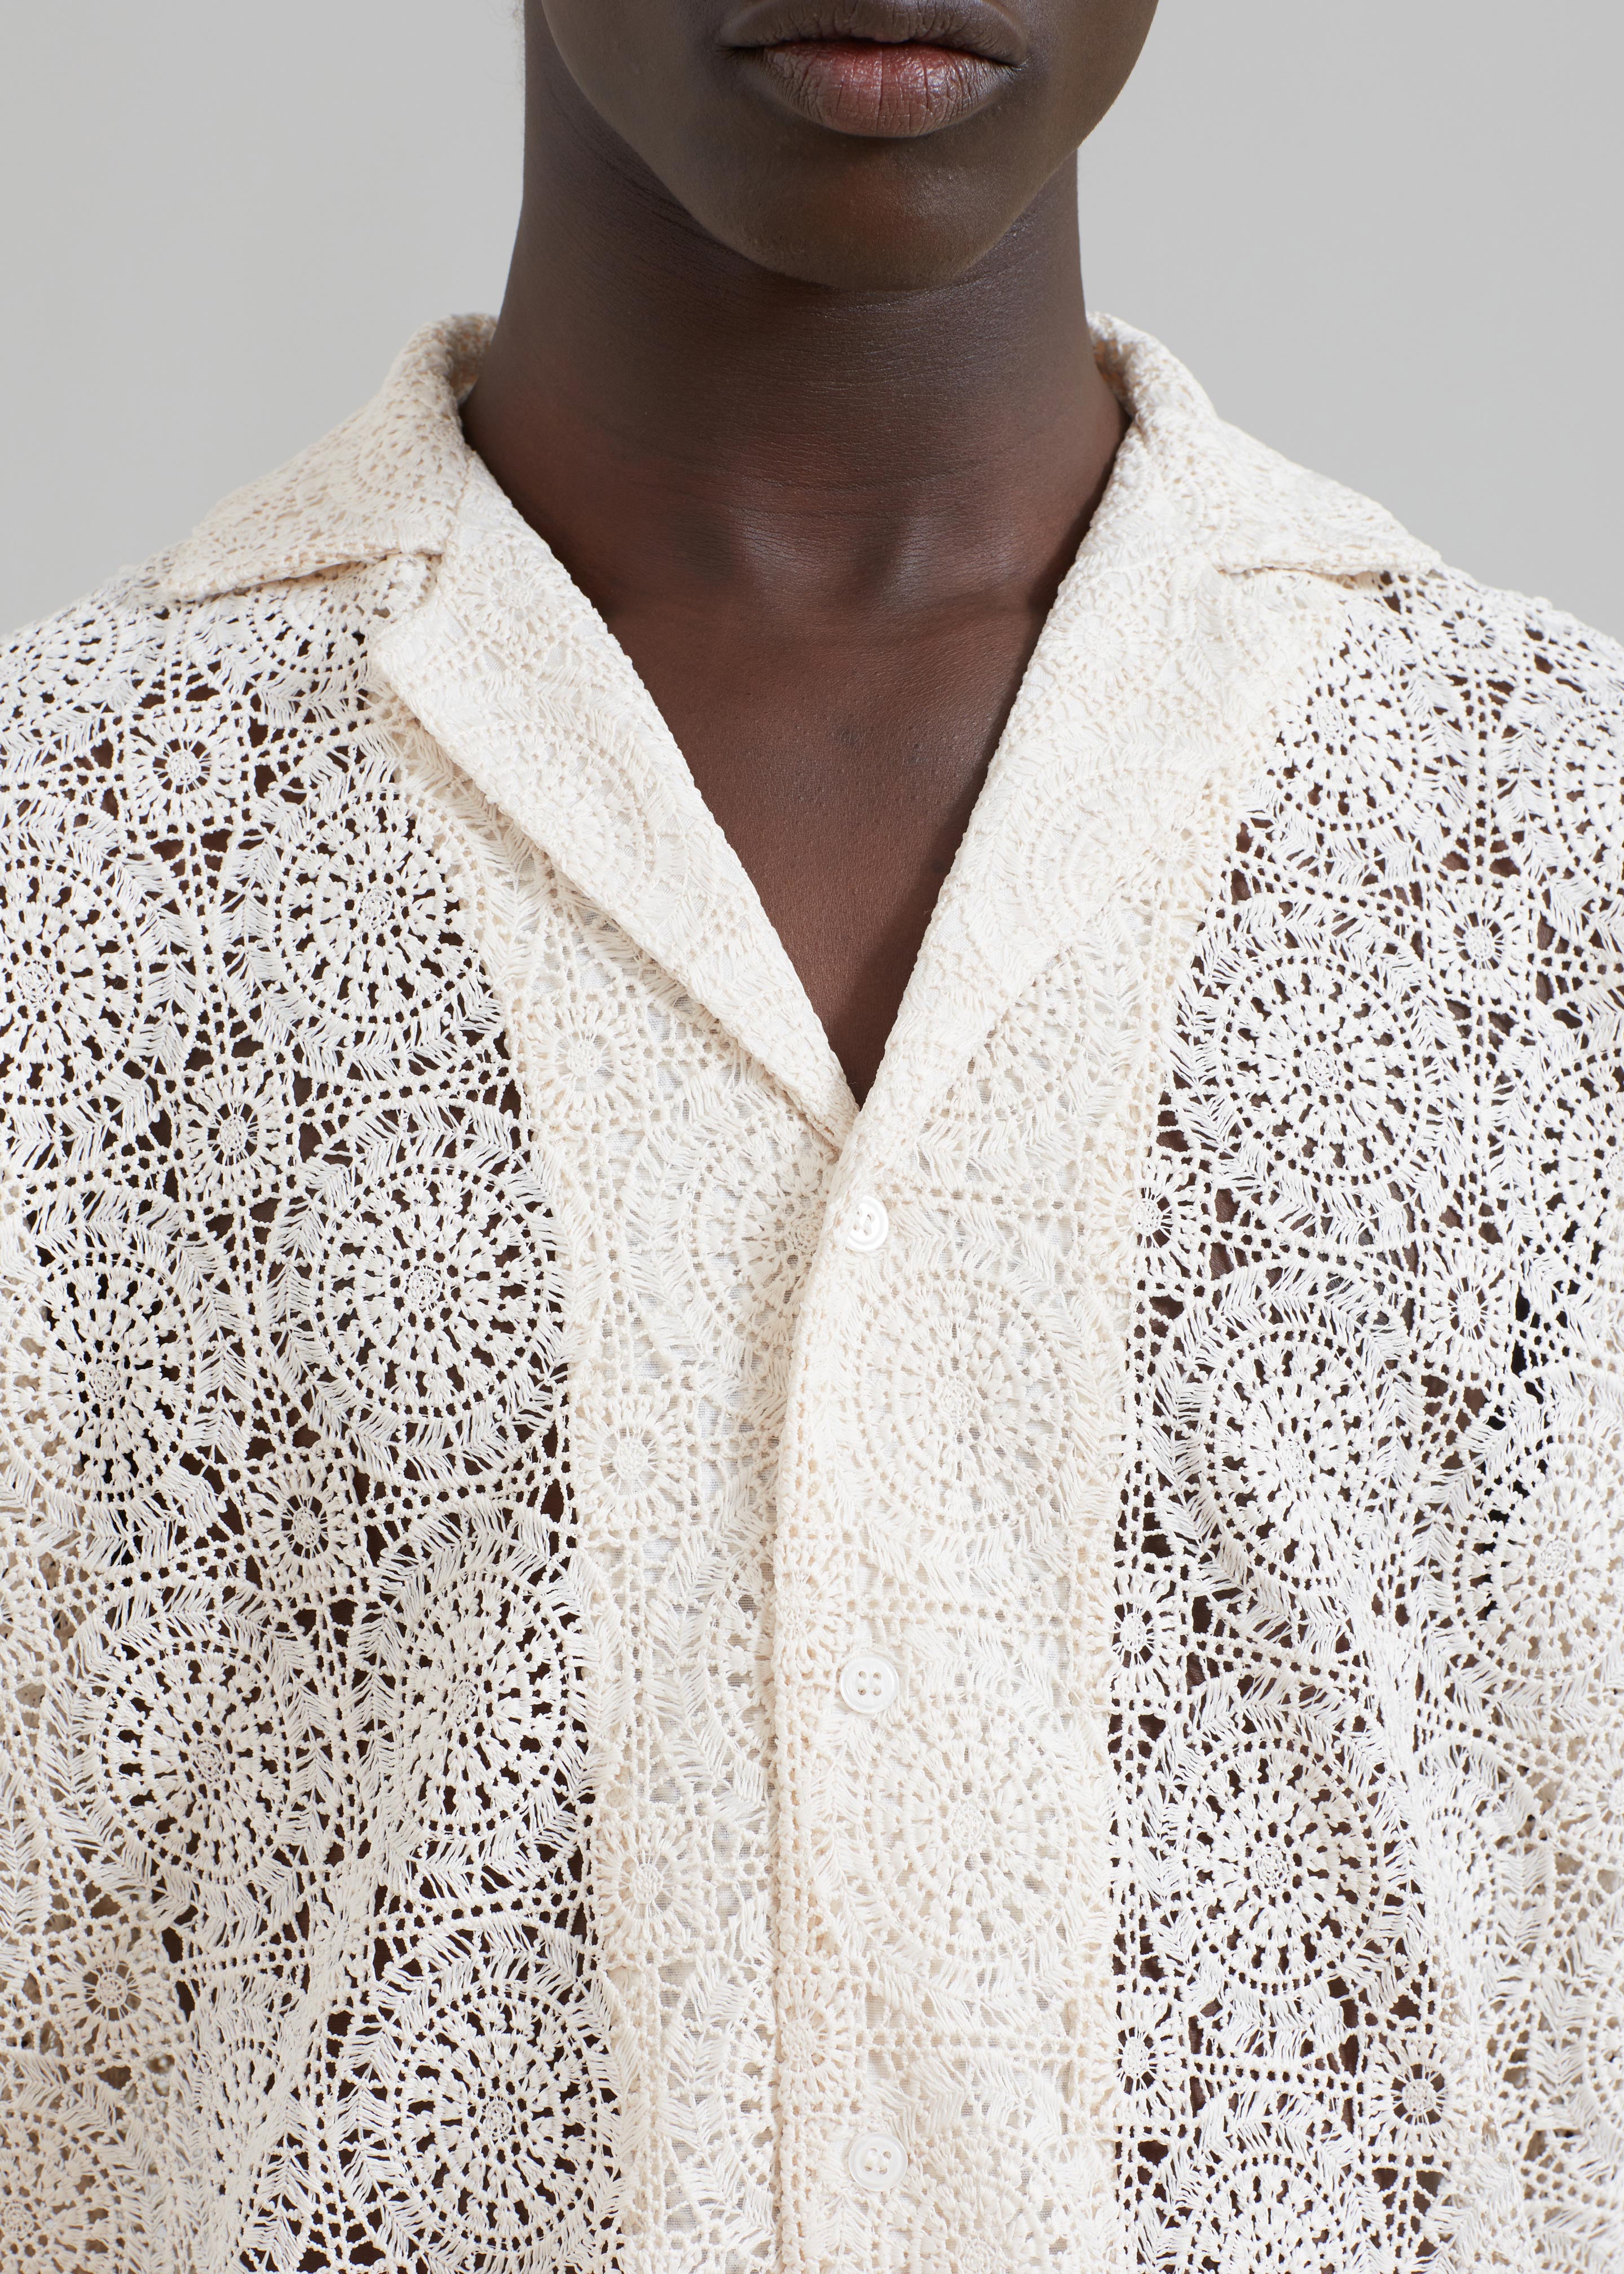 Róhe Resort Crochet Shirt - Ivory - 3